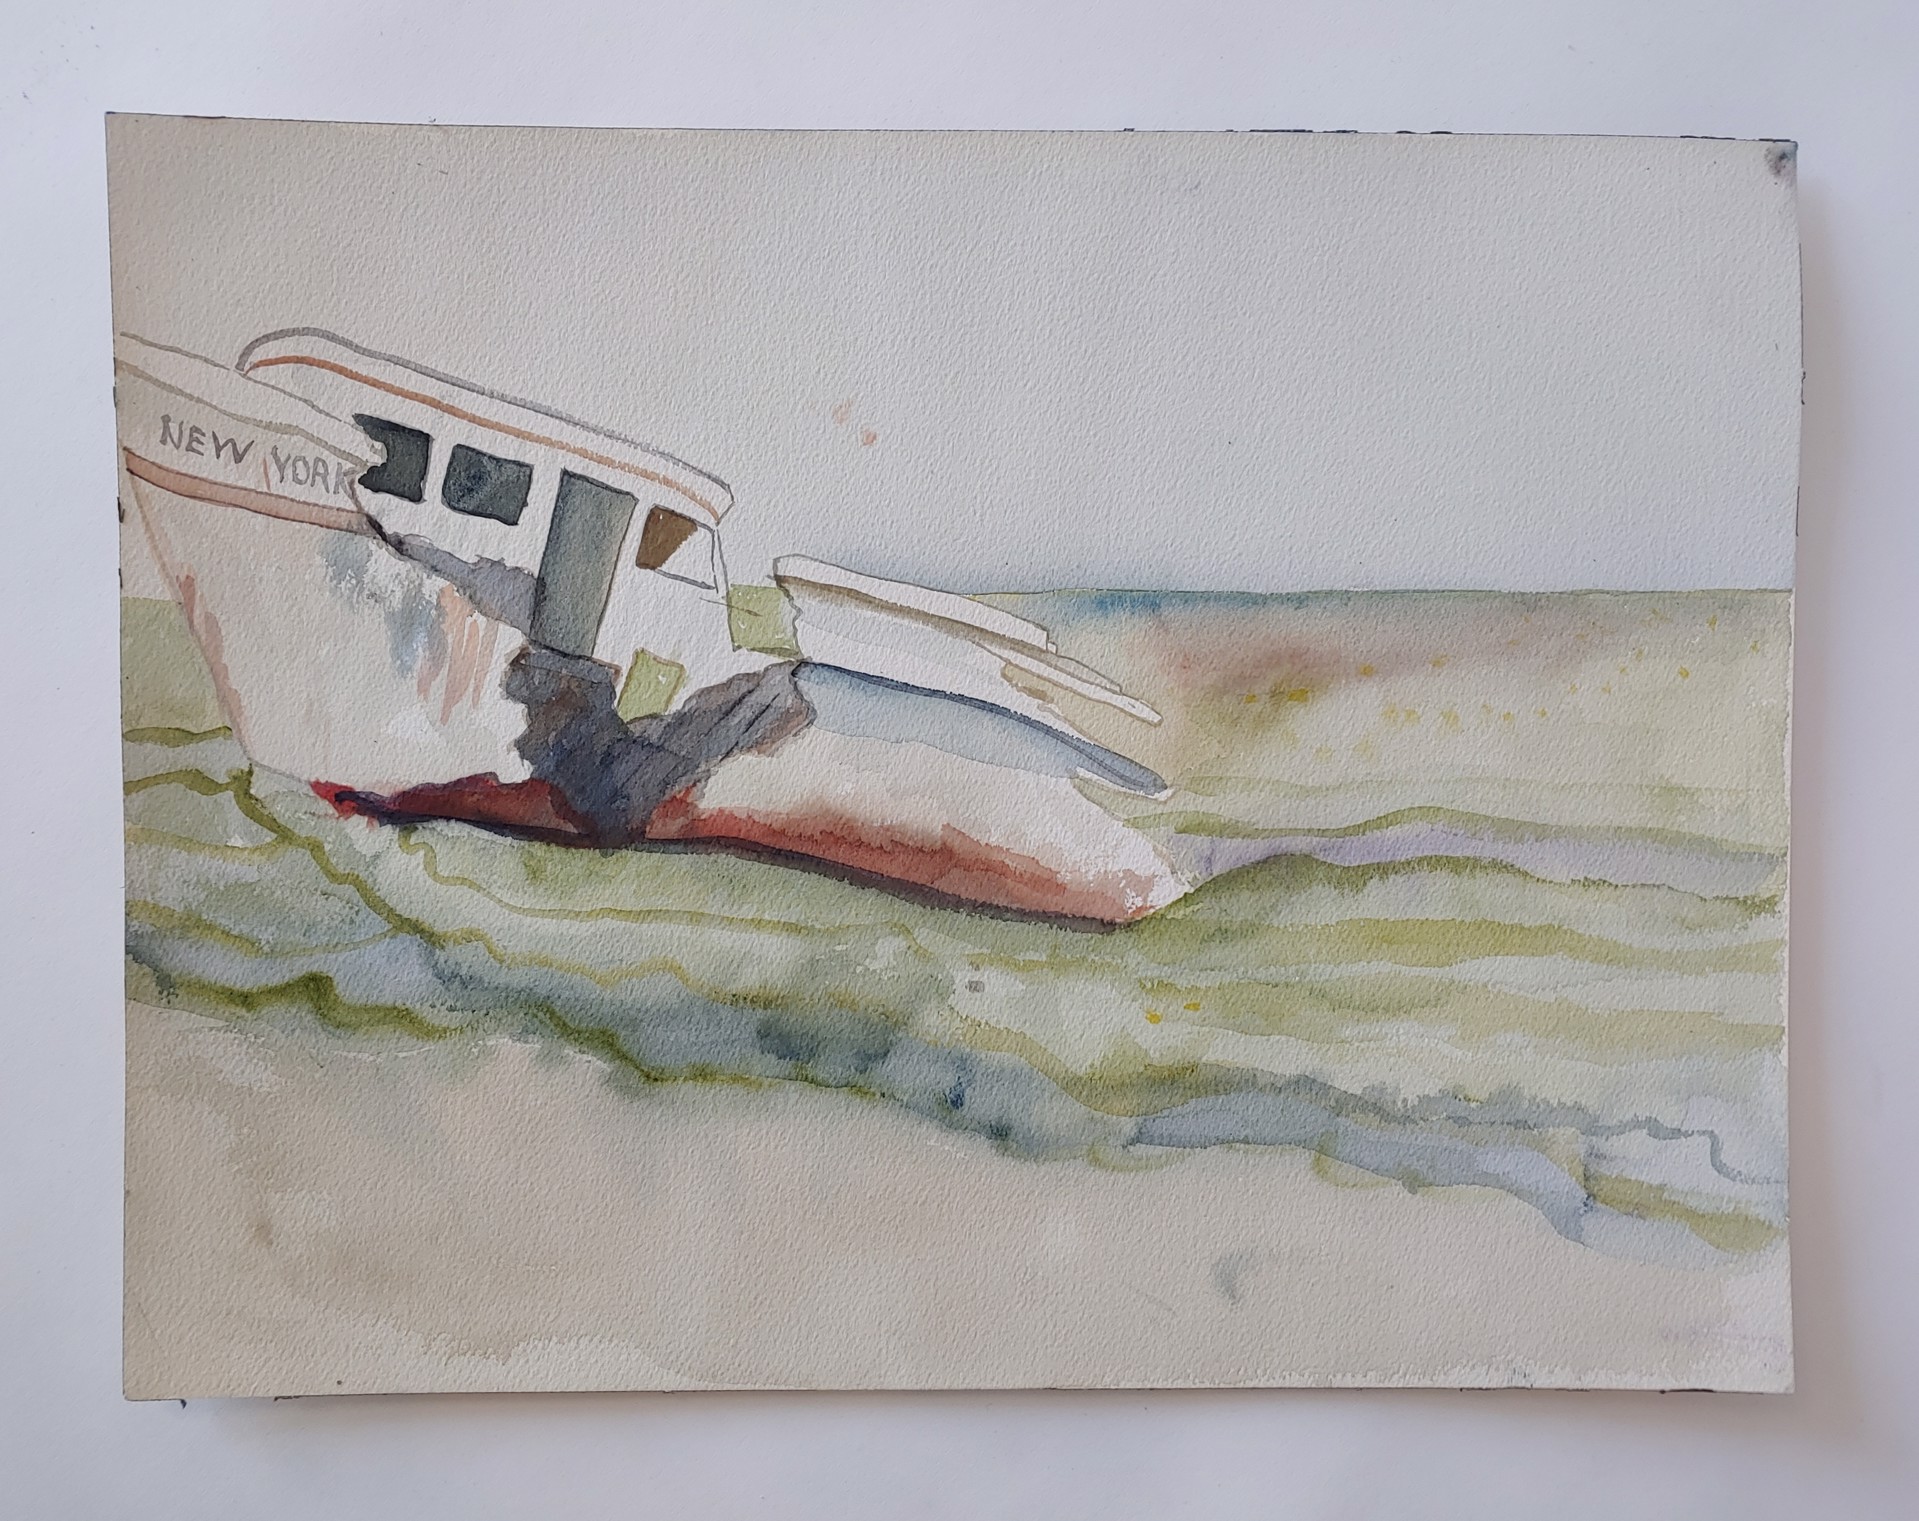 Sunken New York Boat - Watercolor by David Amdur